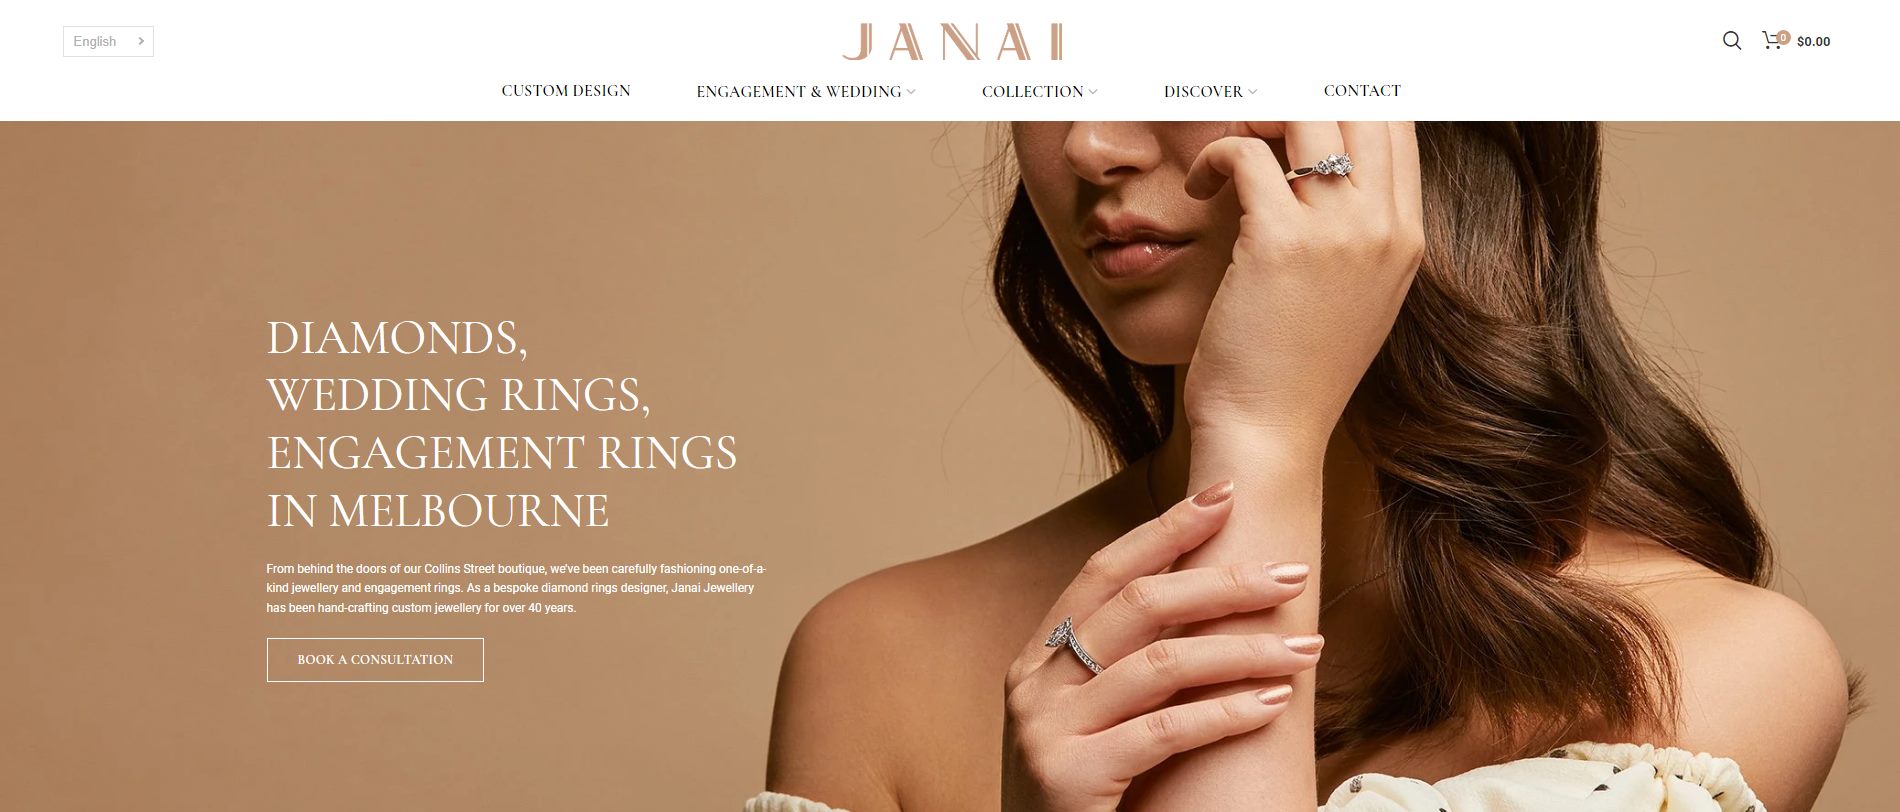 janai jewellery engagement rings & wedding band shop melbourne